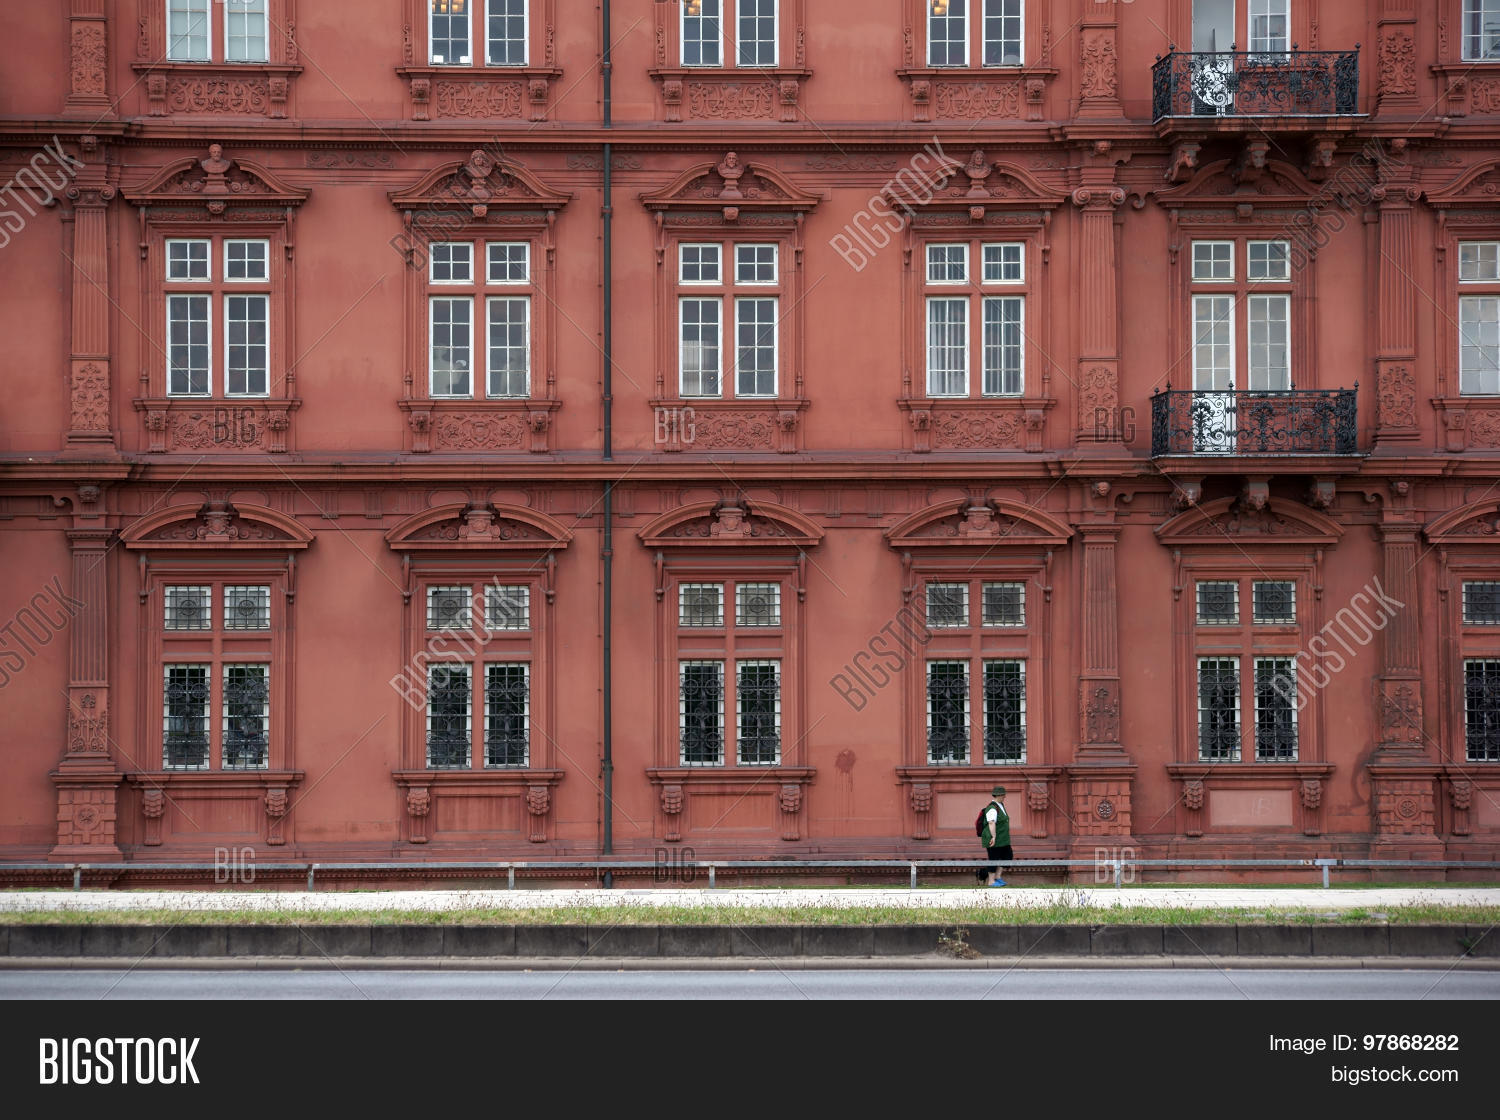 Electoral Palace, Mainz HD wallpapers, Desktop wallpaper - most viewed